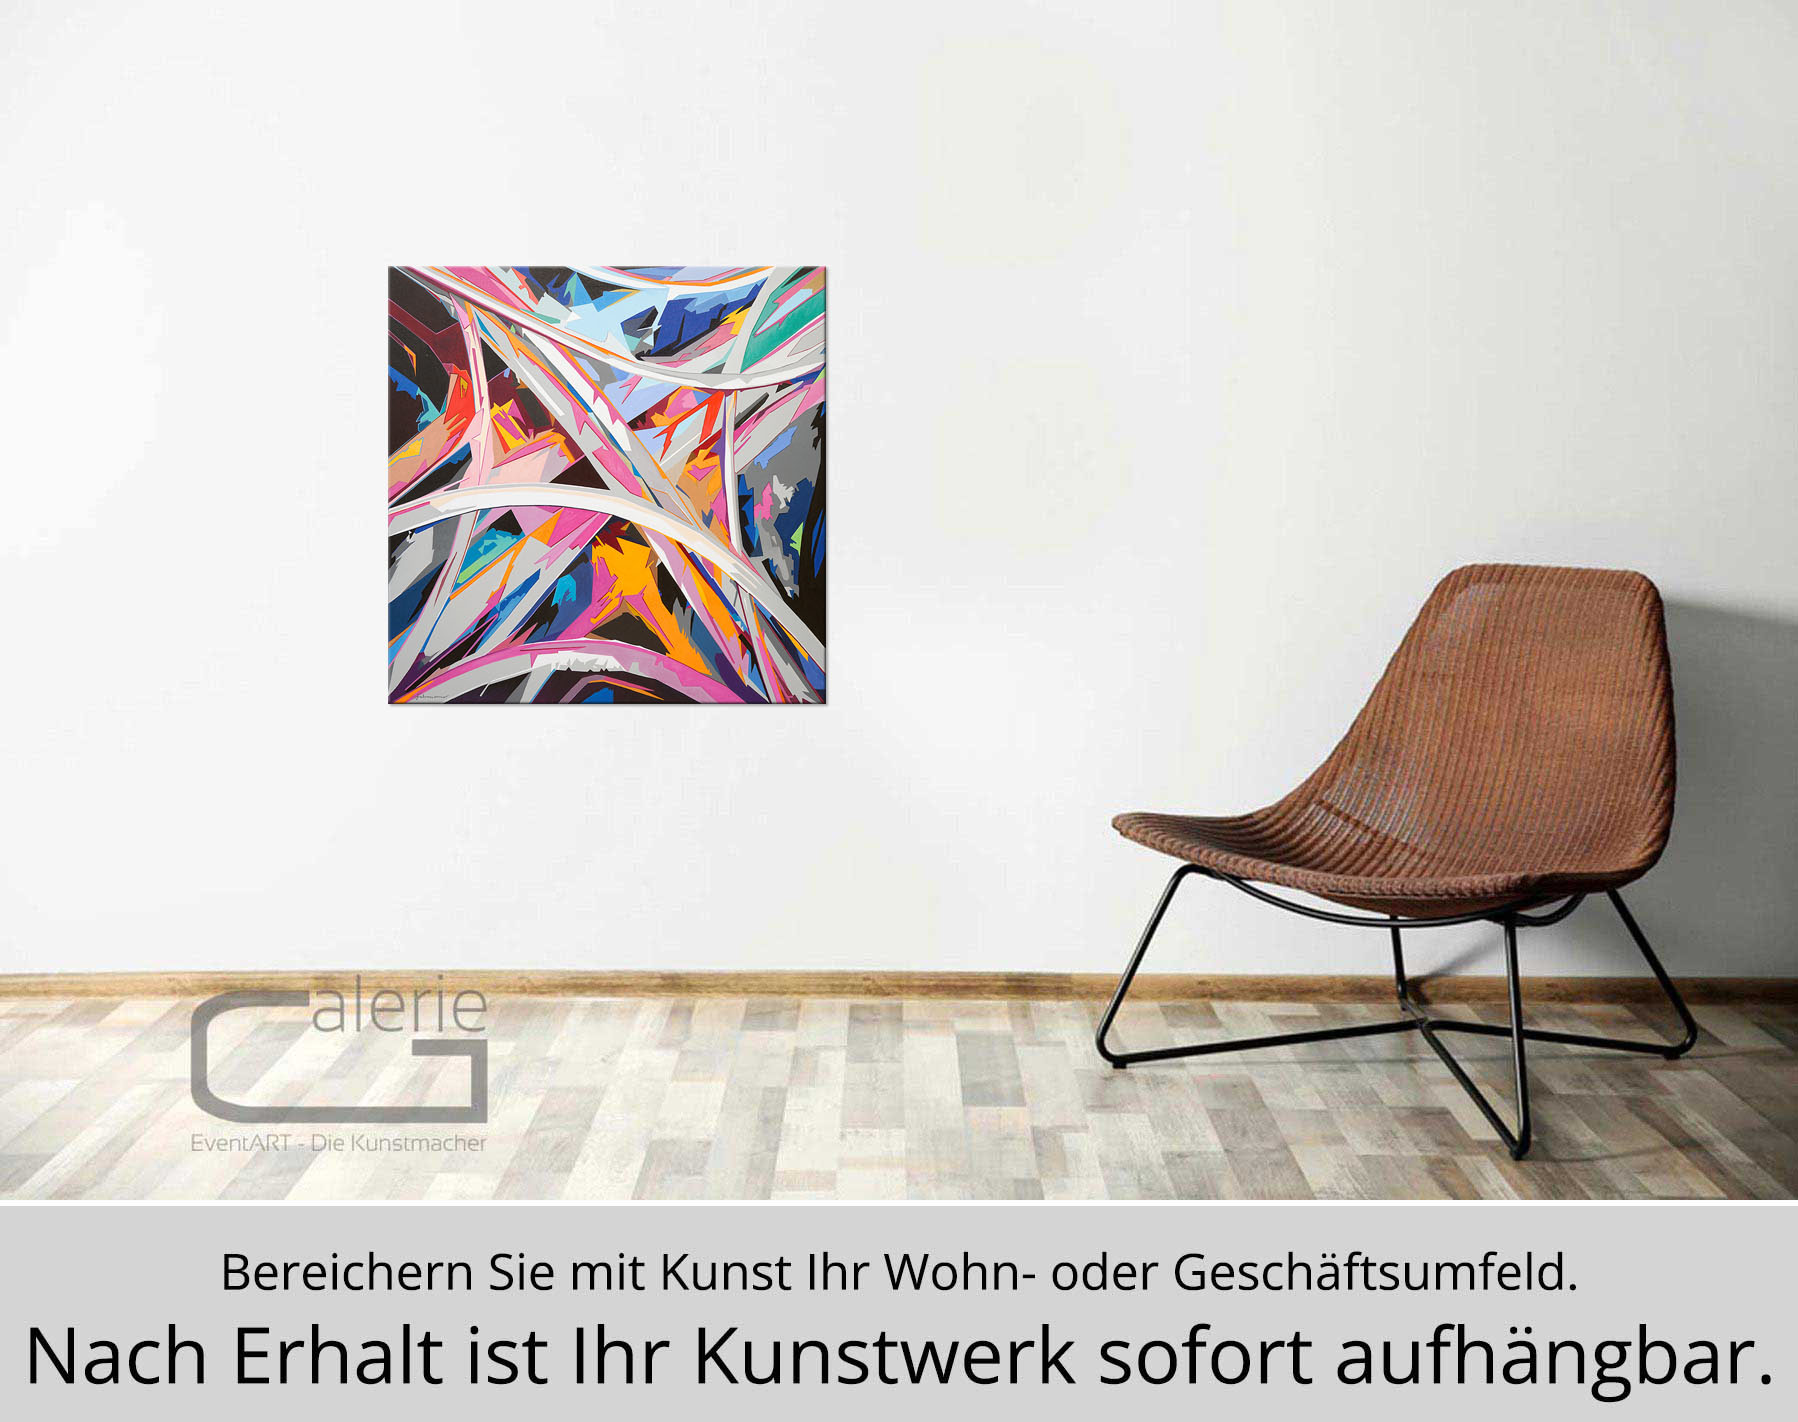 U. Fehrmann: "Always and everywhere III", Edition, signierter Kunstdruck auf Leinwand